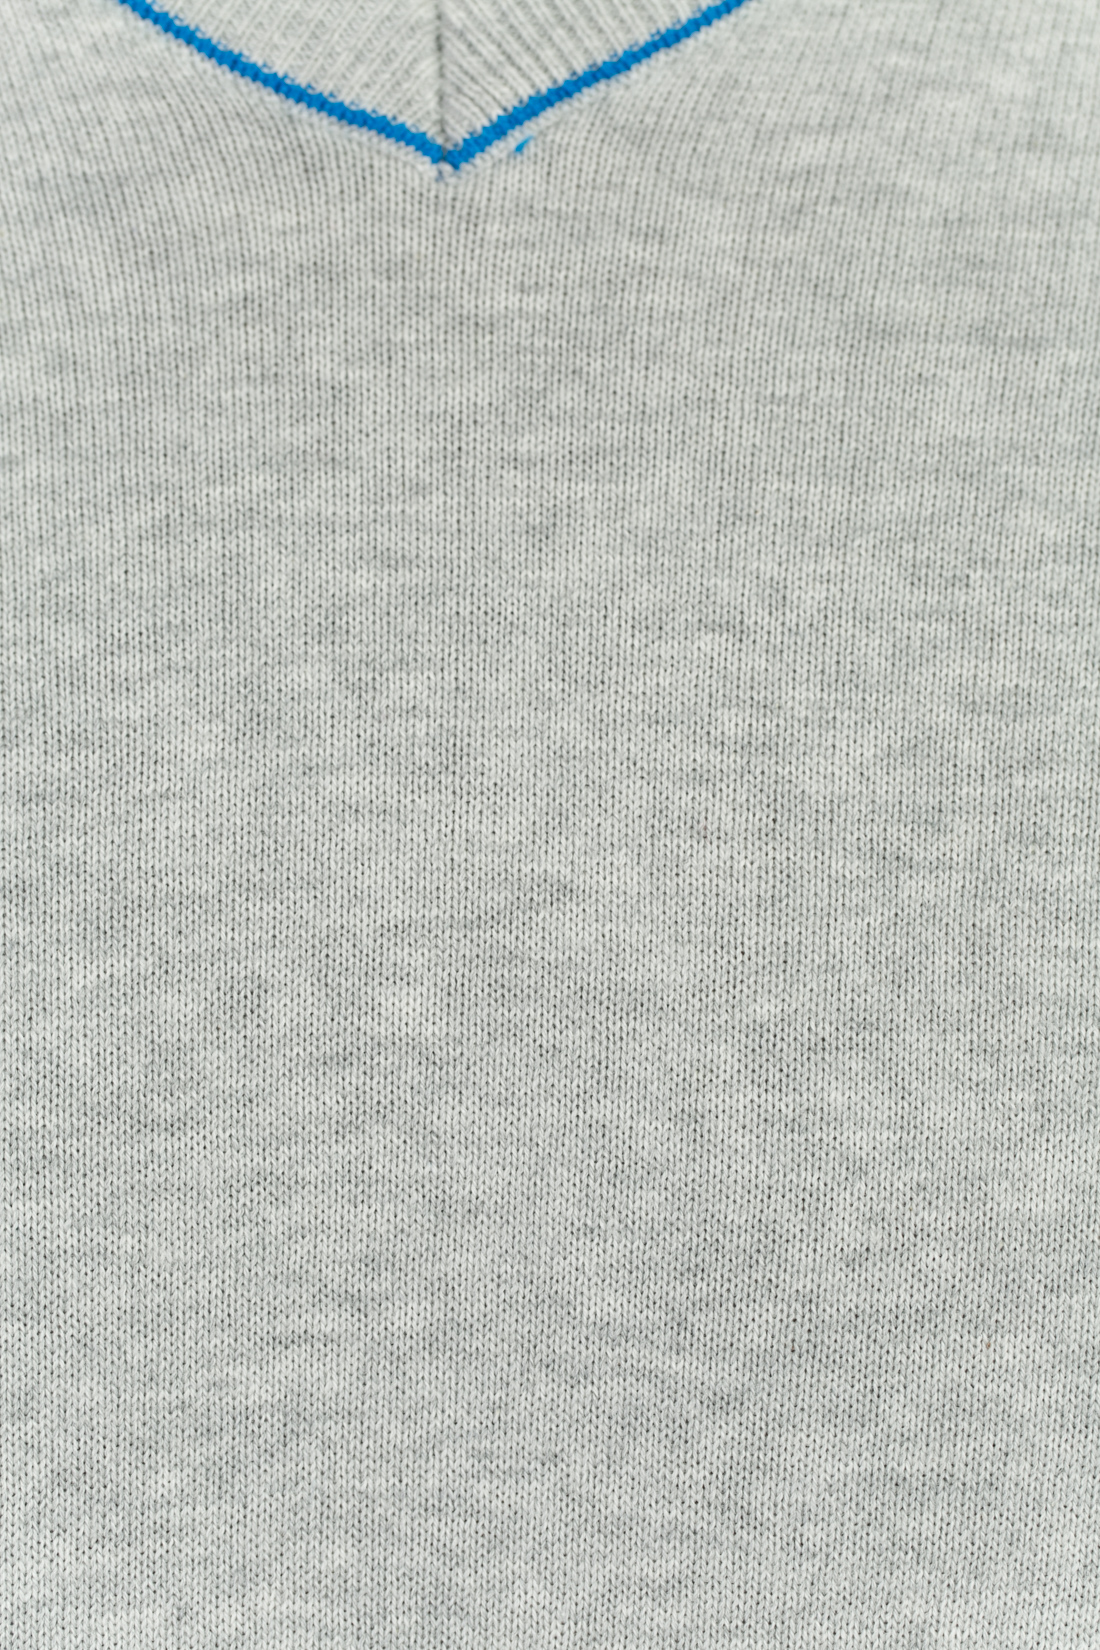 Пуловер с окантовкой (арт. baon B637011), размер L, цвет silver melange#серый Пуловер с окантовкой (арт. baon B637011) - фото 4